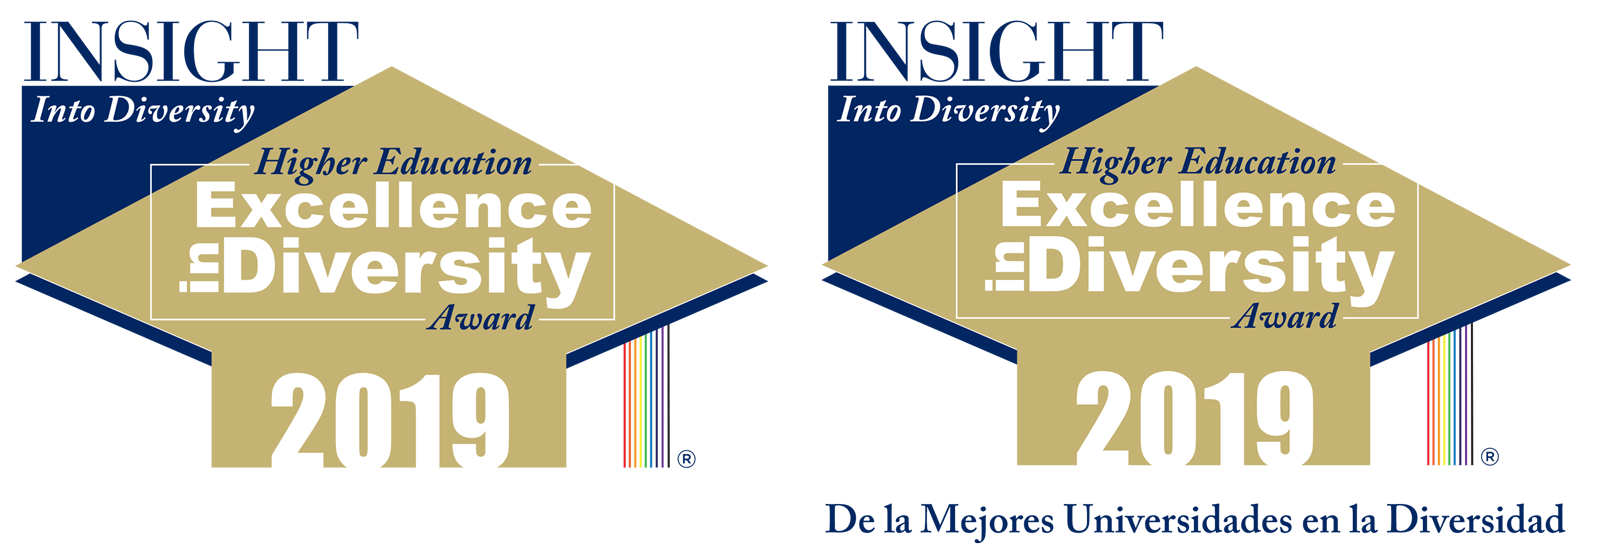 Insight into Diversity award badges